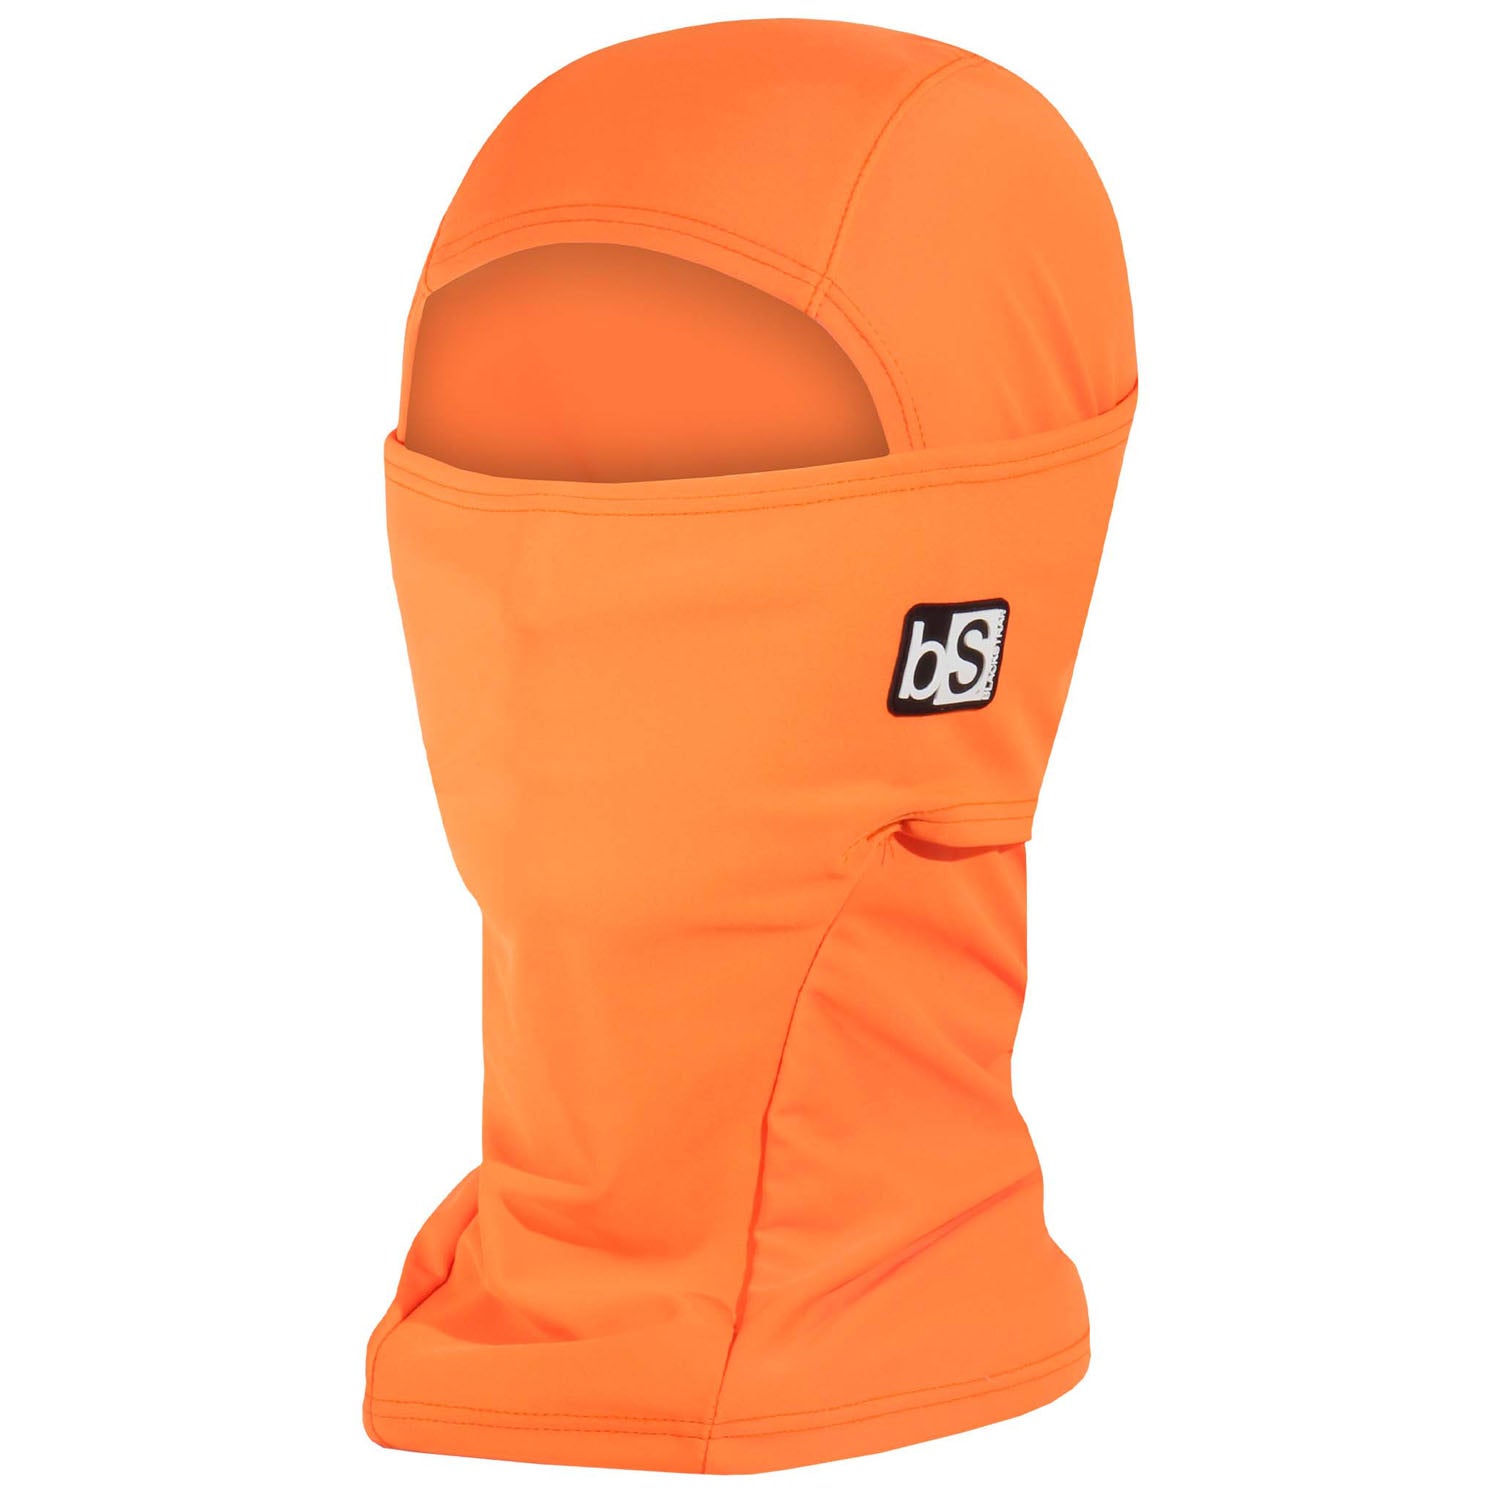 Blackstrap Hood Bright Orange OS Neck Warmers & Face Masks